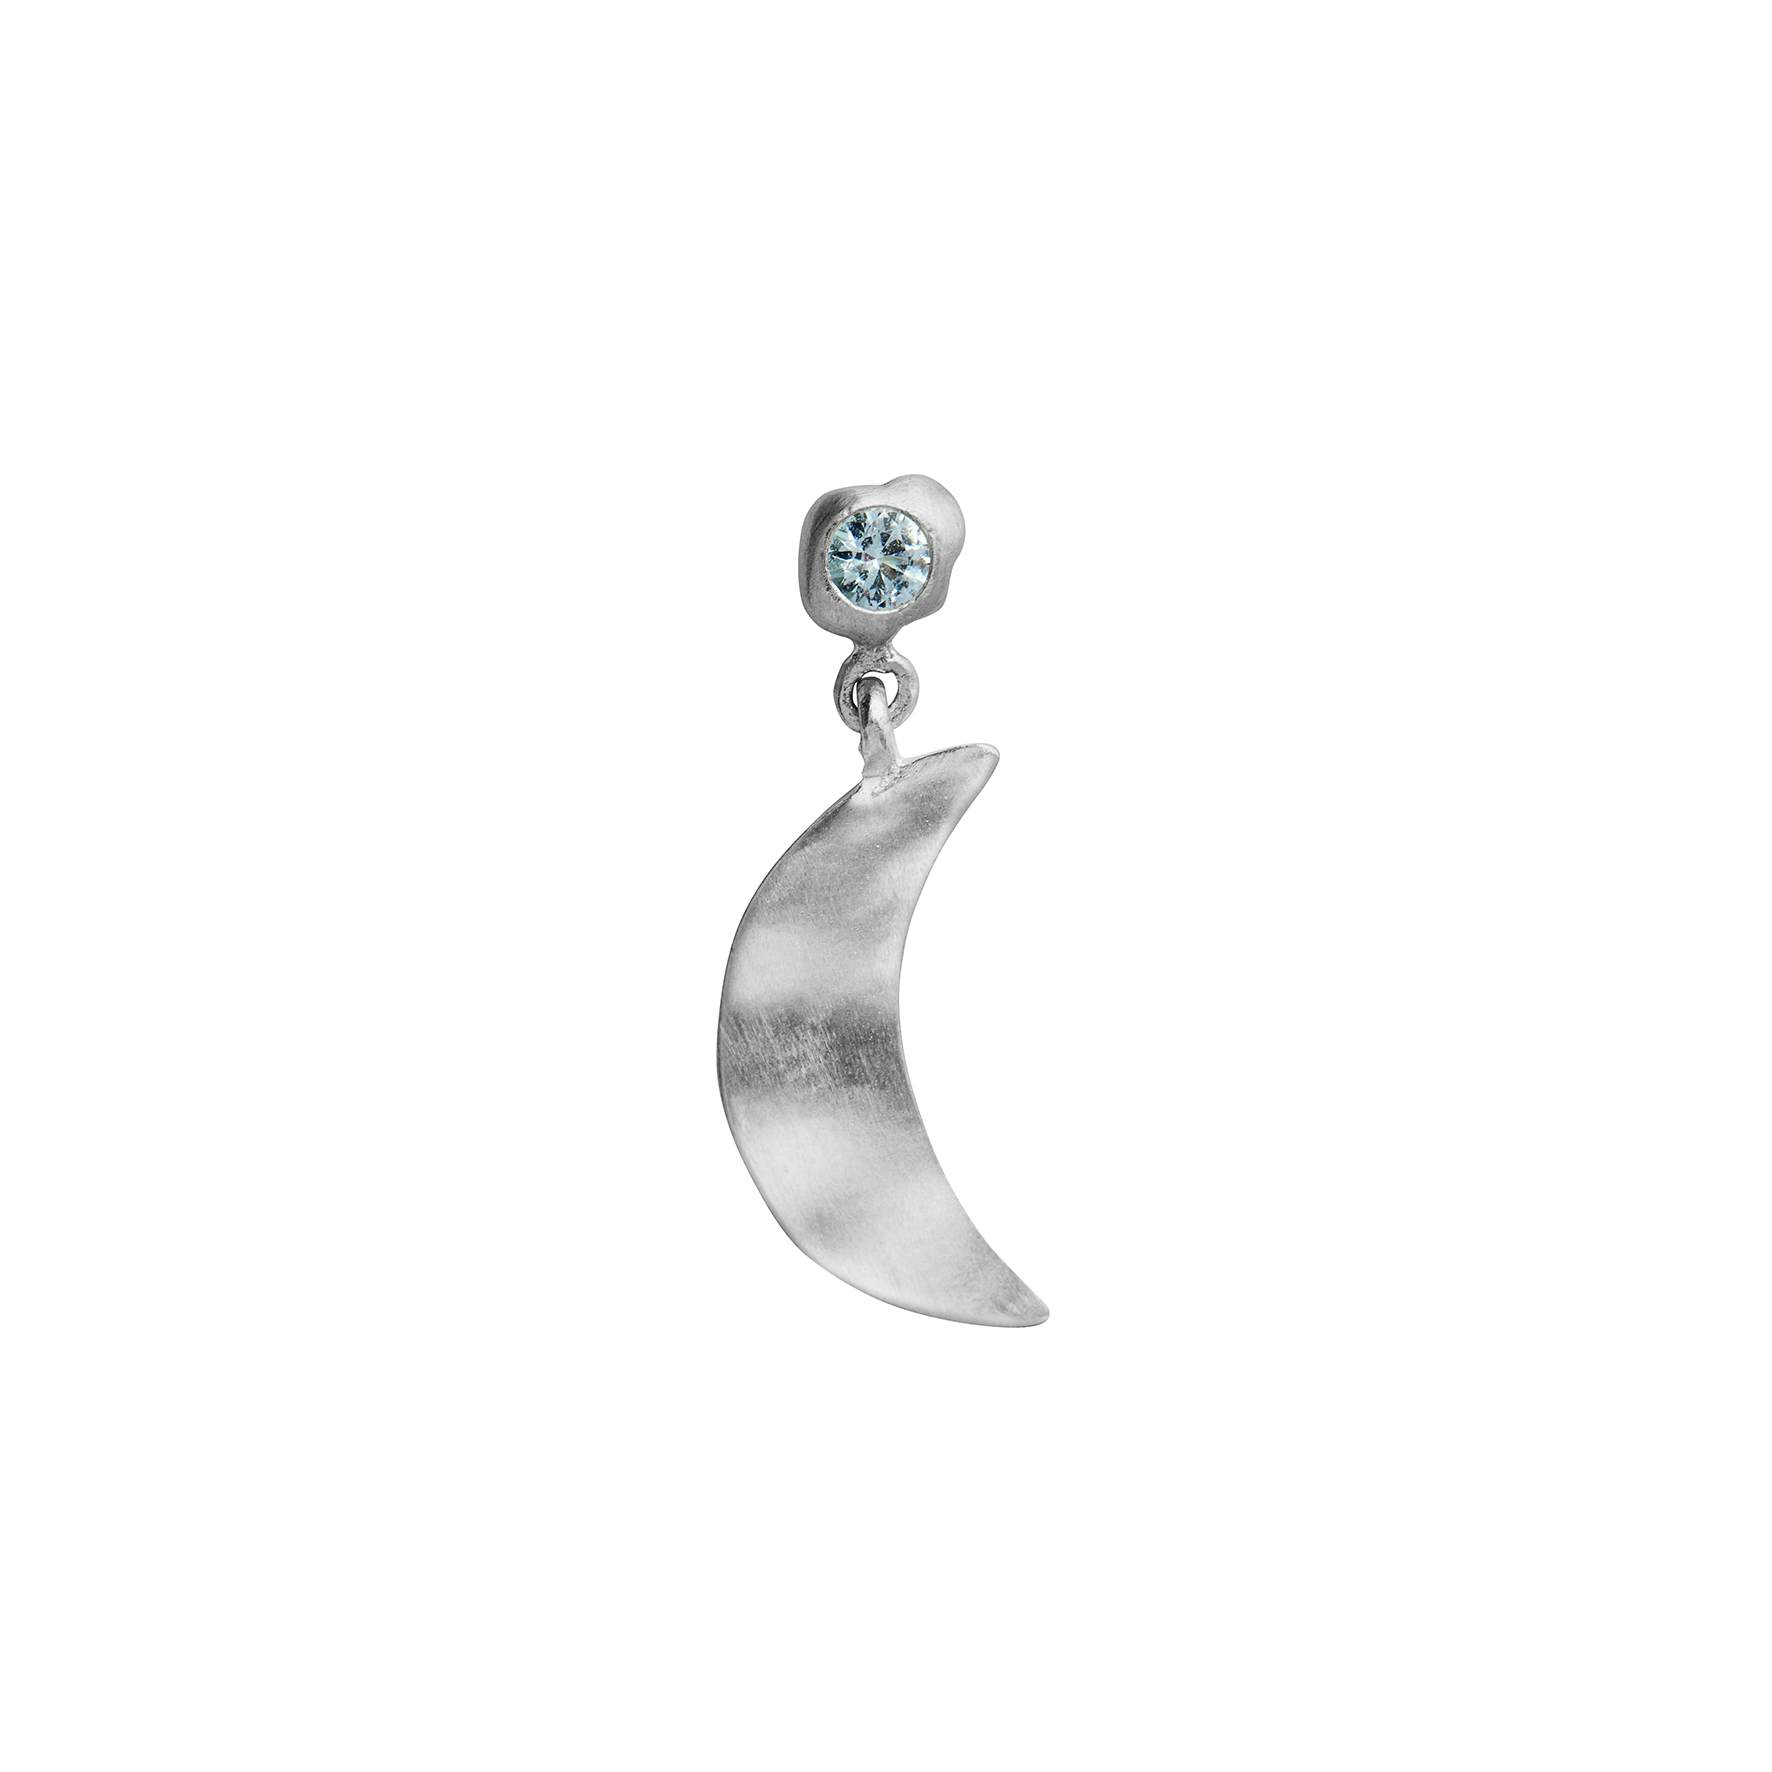 Big Dot Bella Moon with Blue Lagune Stone von STINE A Jewelry in Silber Sterling 925